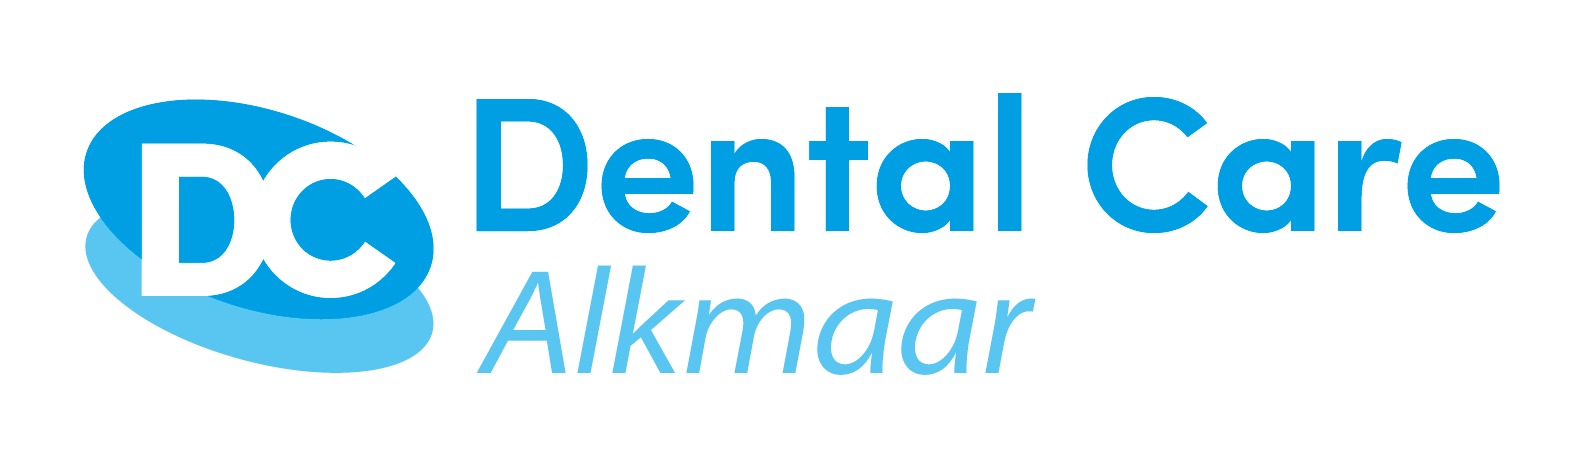 Dental Care Alkmaar 